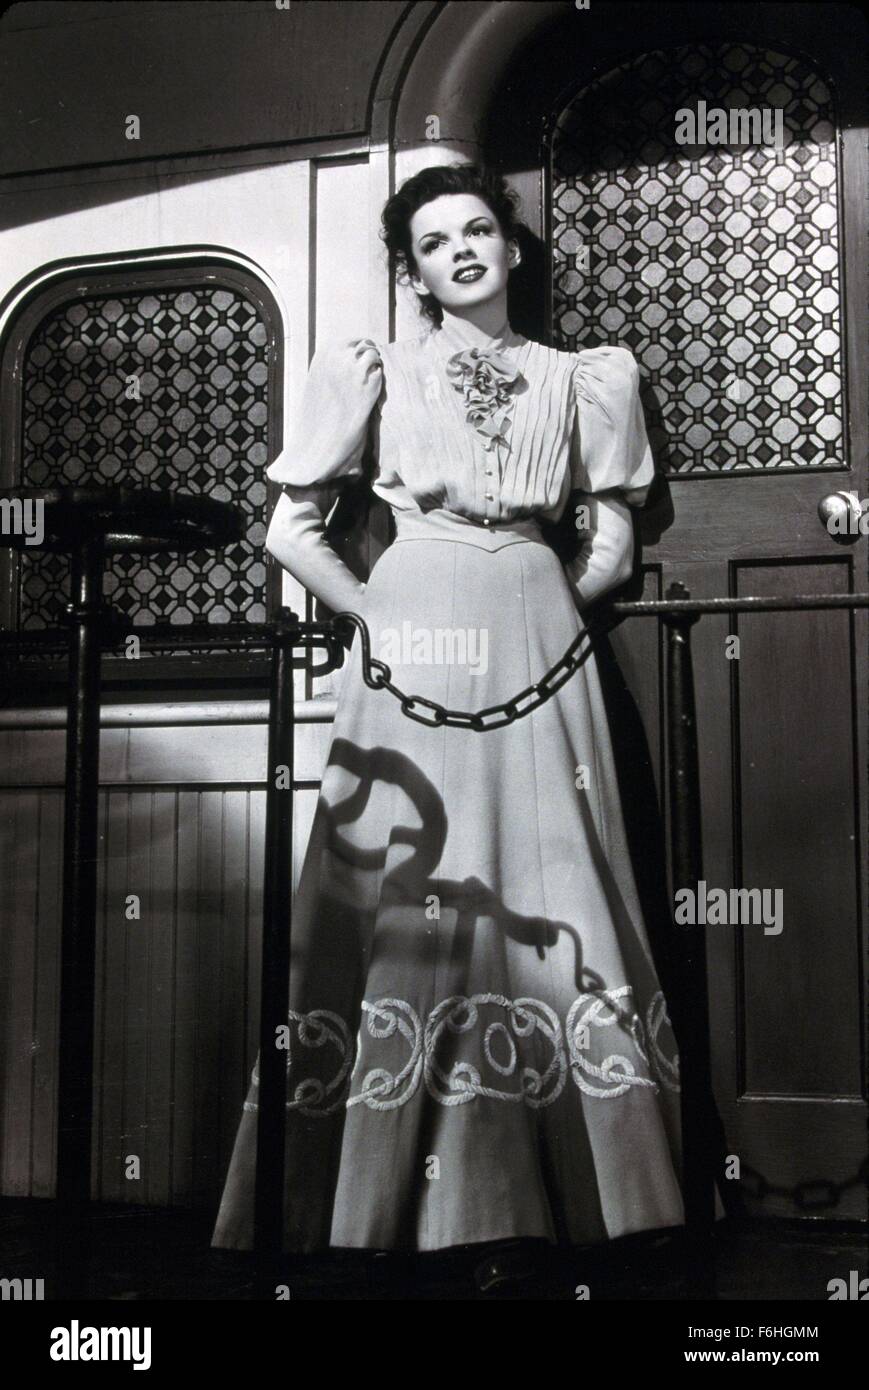 Filmtitel 1945: HARVEY Mädchen, Regie: GEORGE SIDNEY, Studio: MGM, abgebildet: JUDY GARLAND. (Bild Kredit: SNAP) Stockfoto